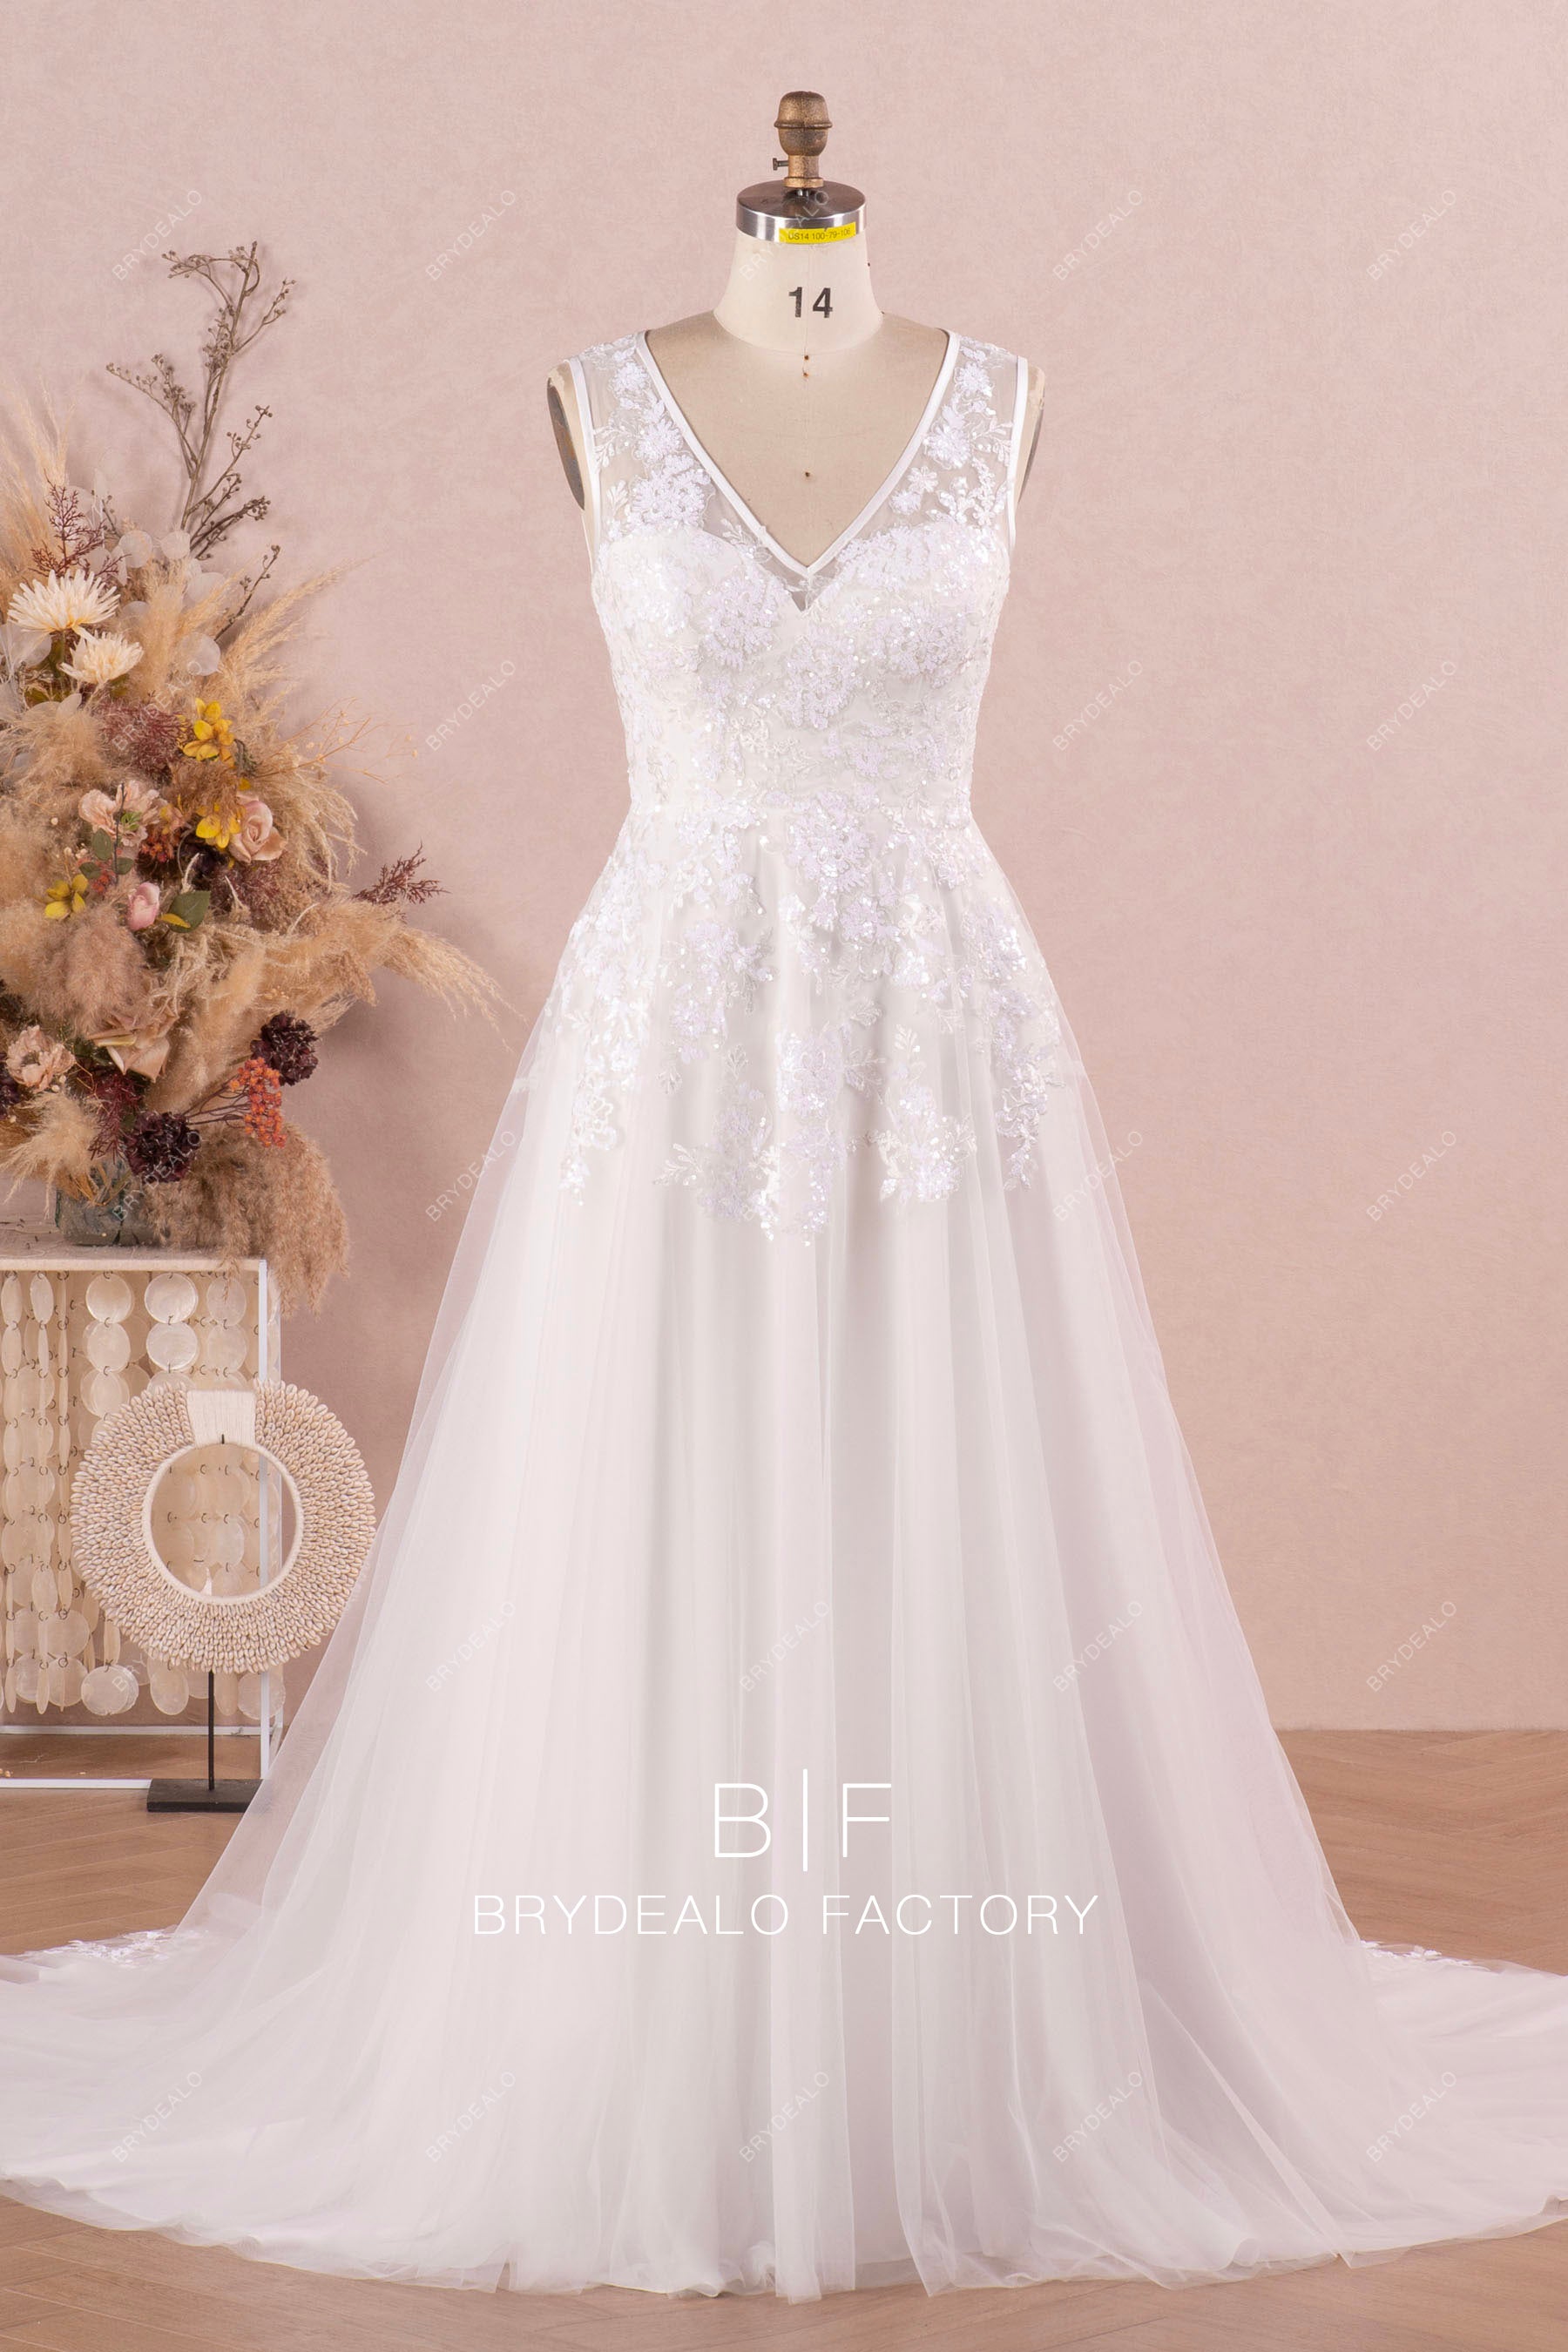 sparkly lace Aline wedding dress